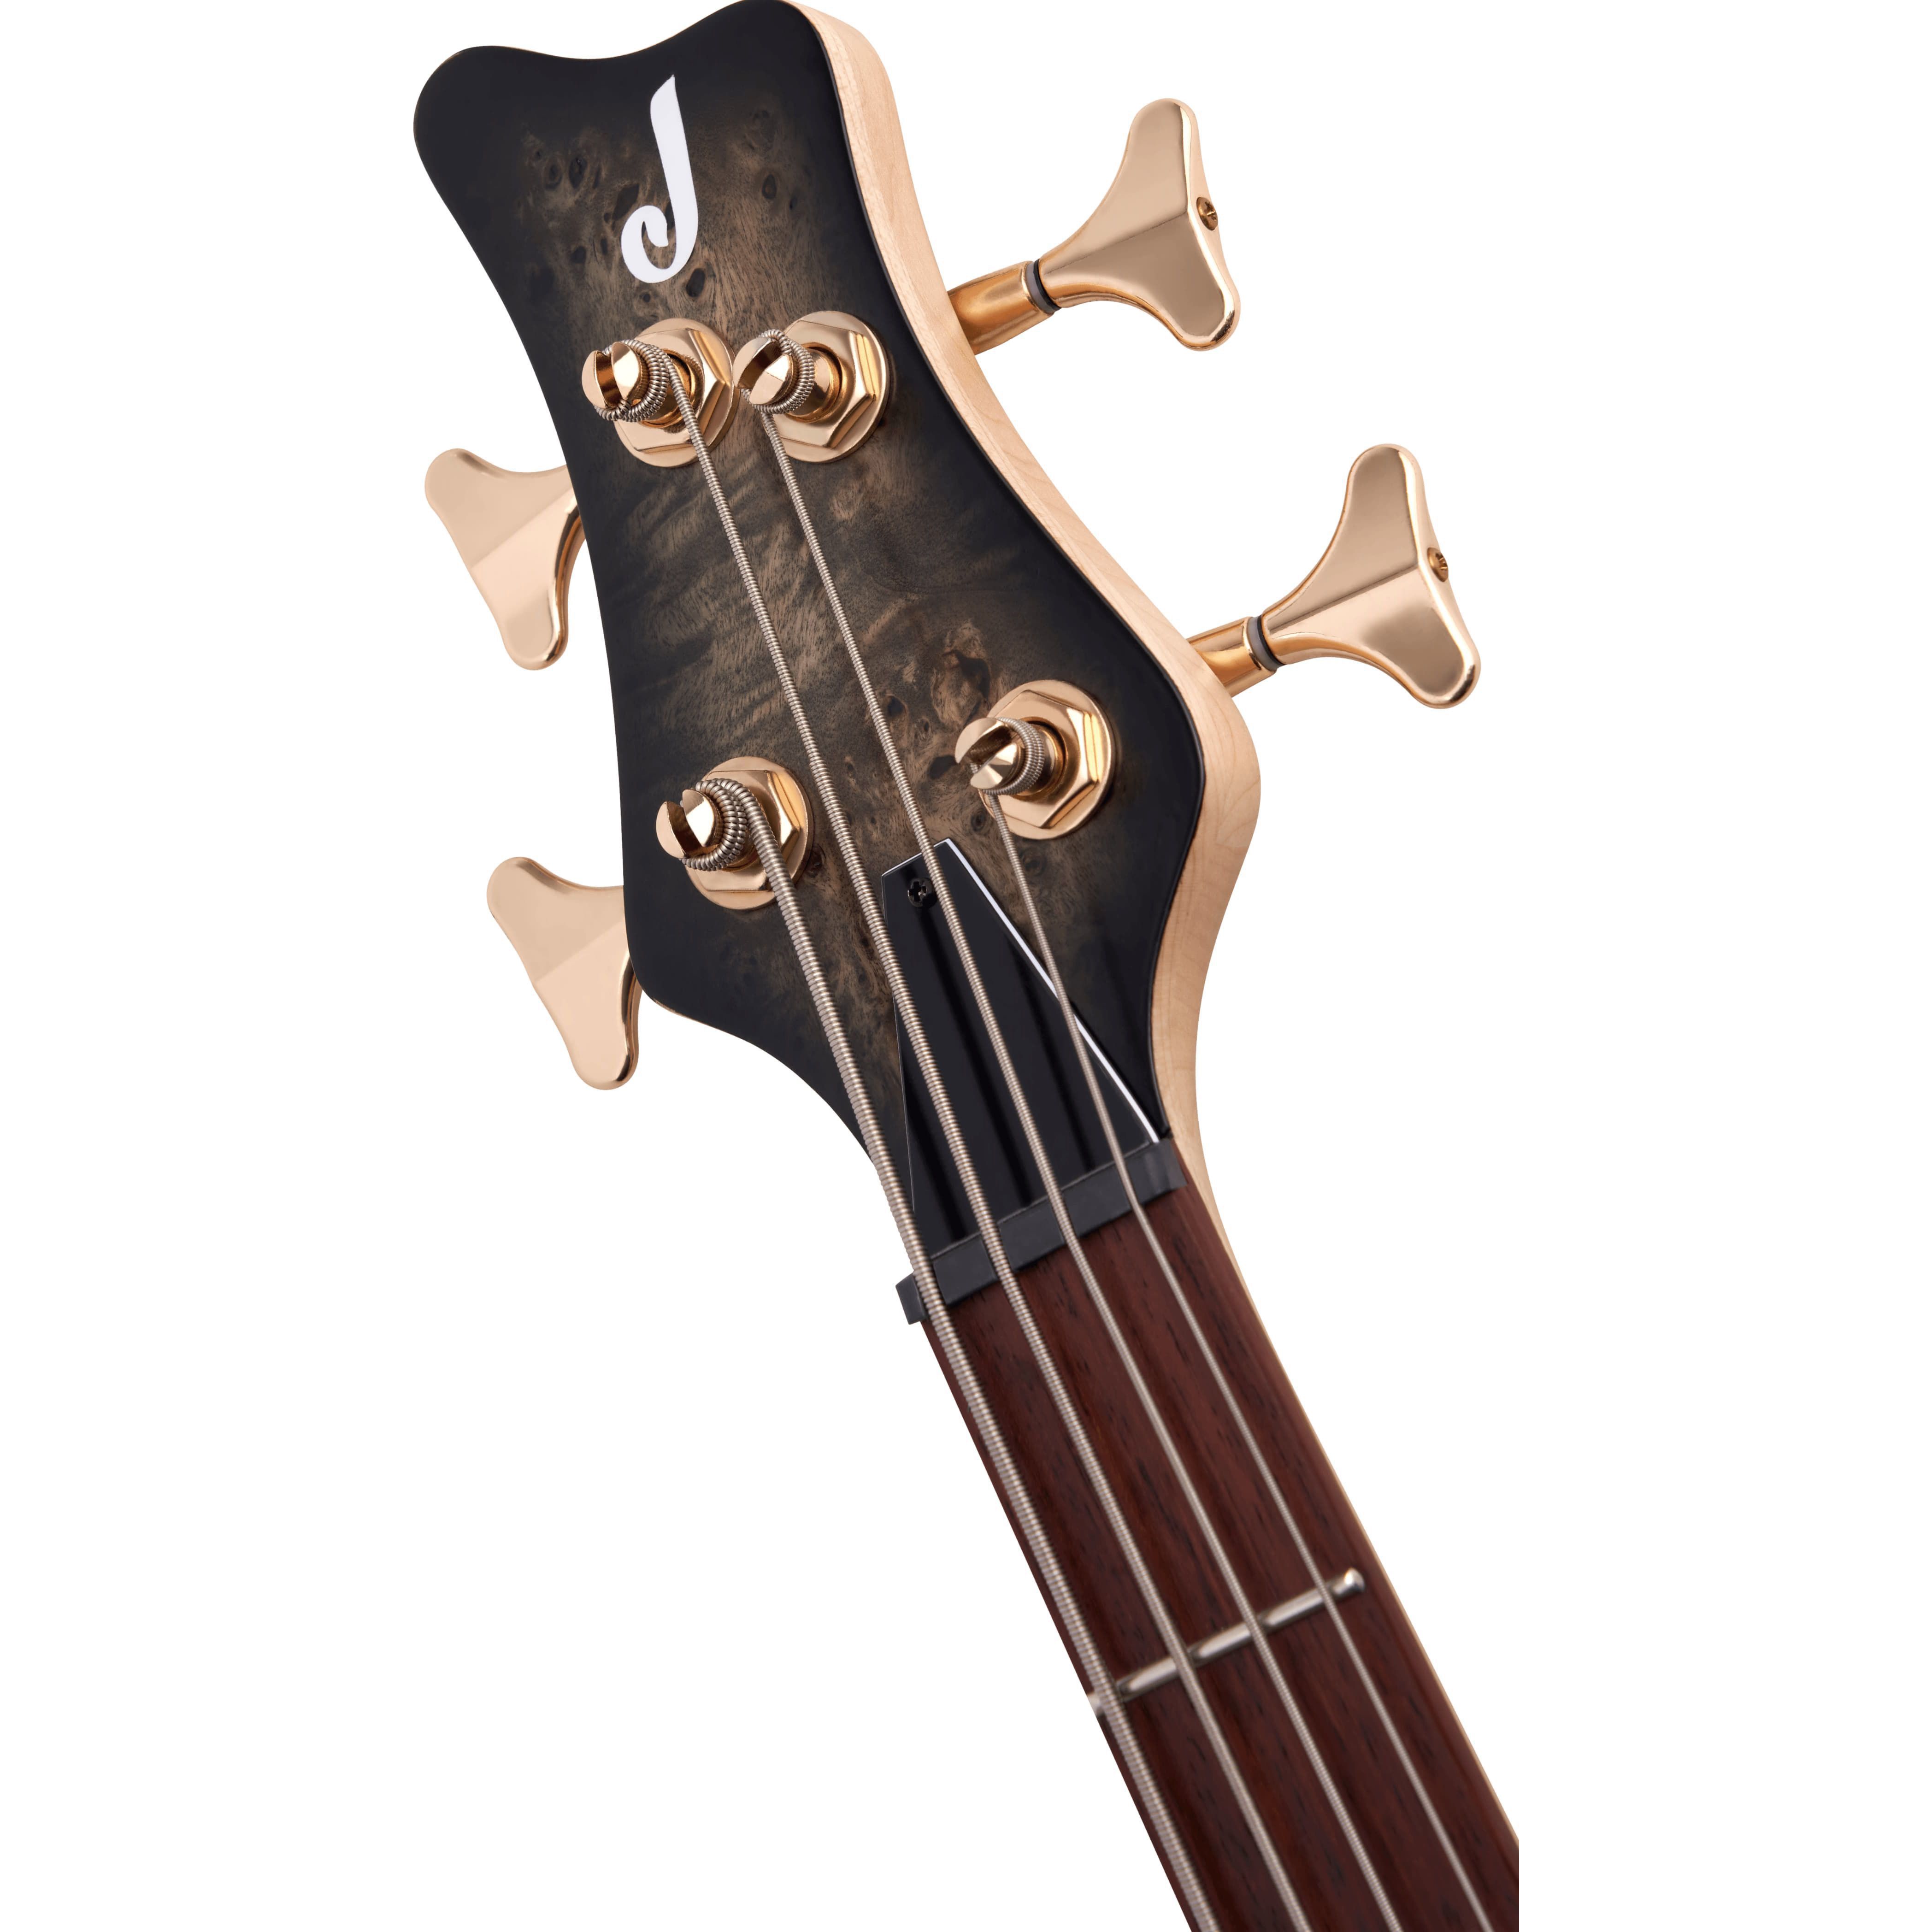 Jackson Pro Series Spectra Bass SBP IV Transparent Black Burst Бас-гитары